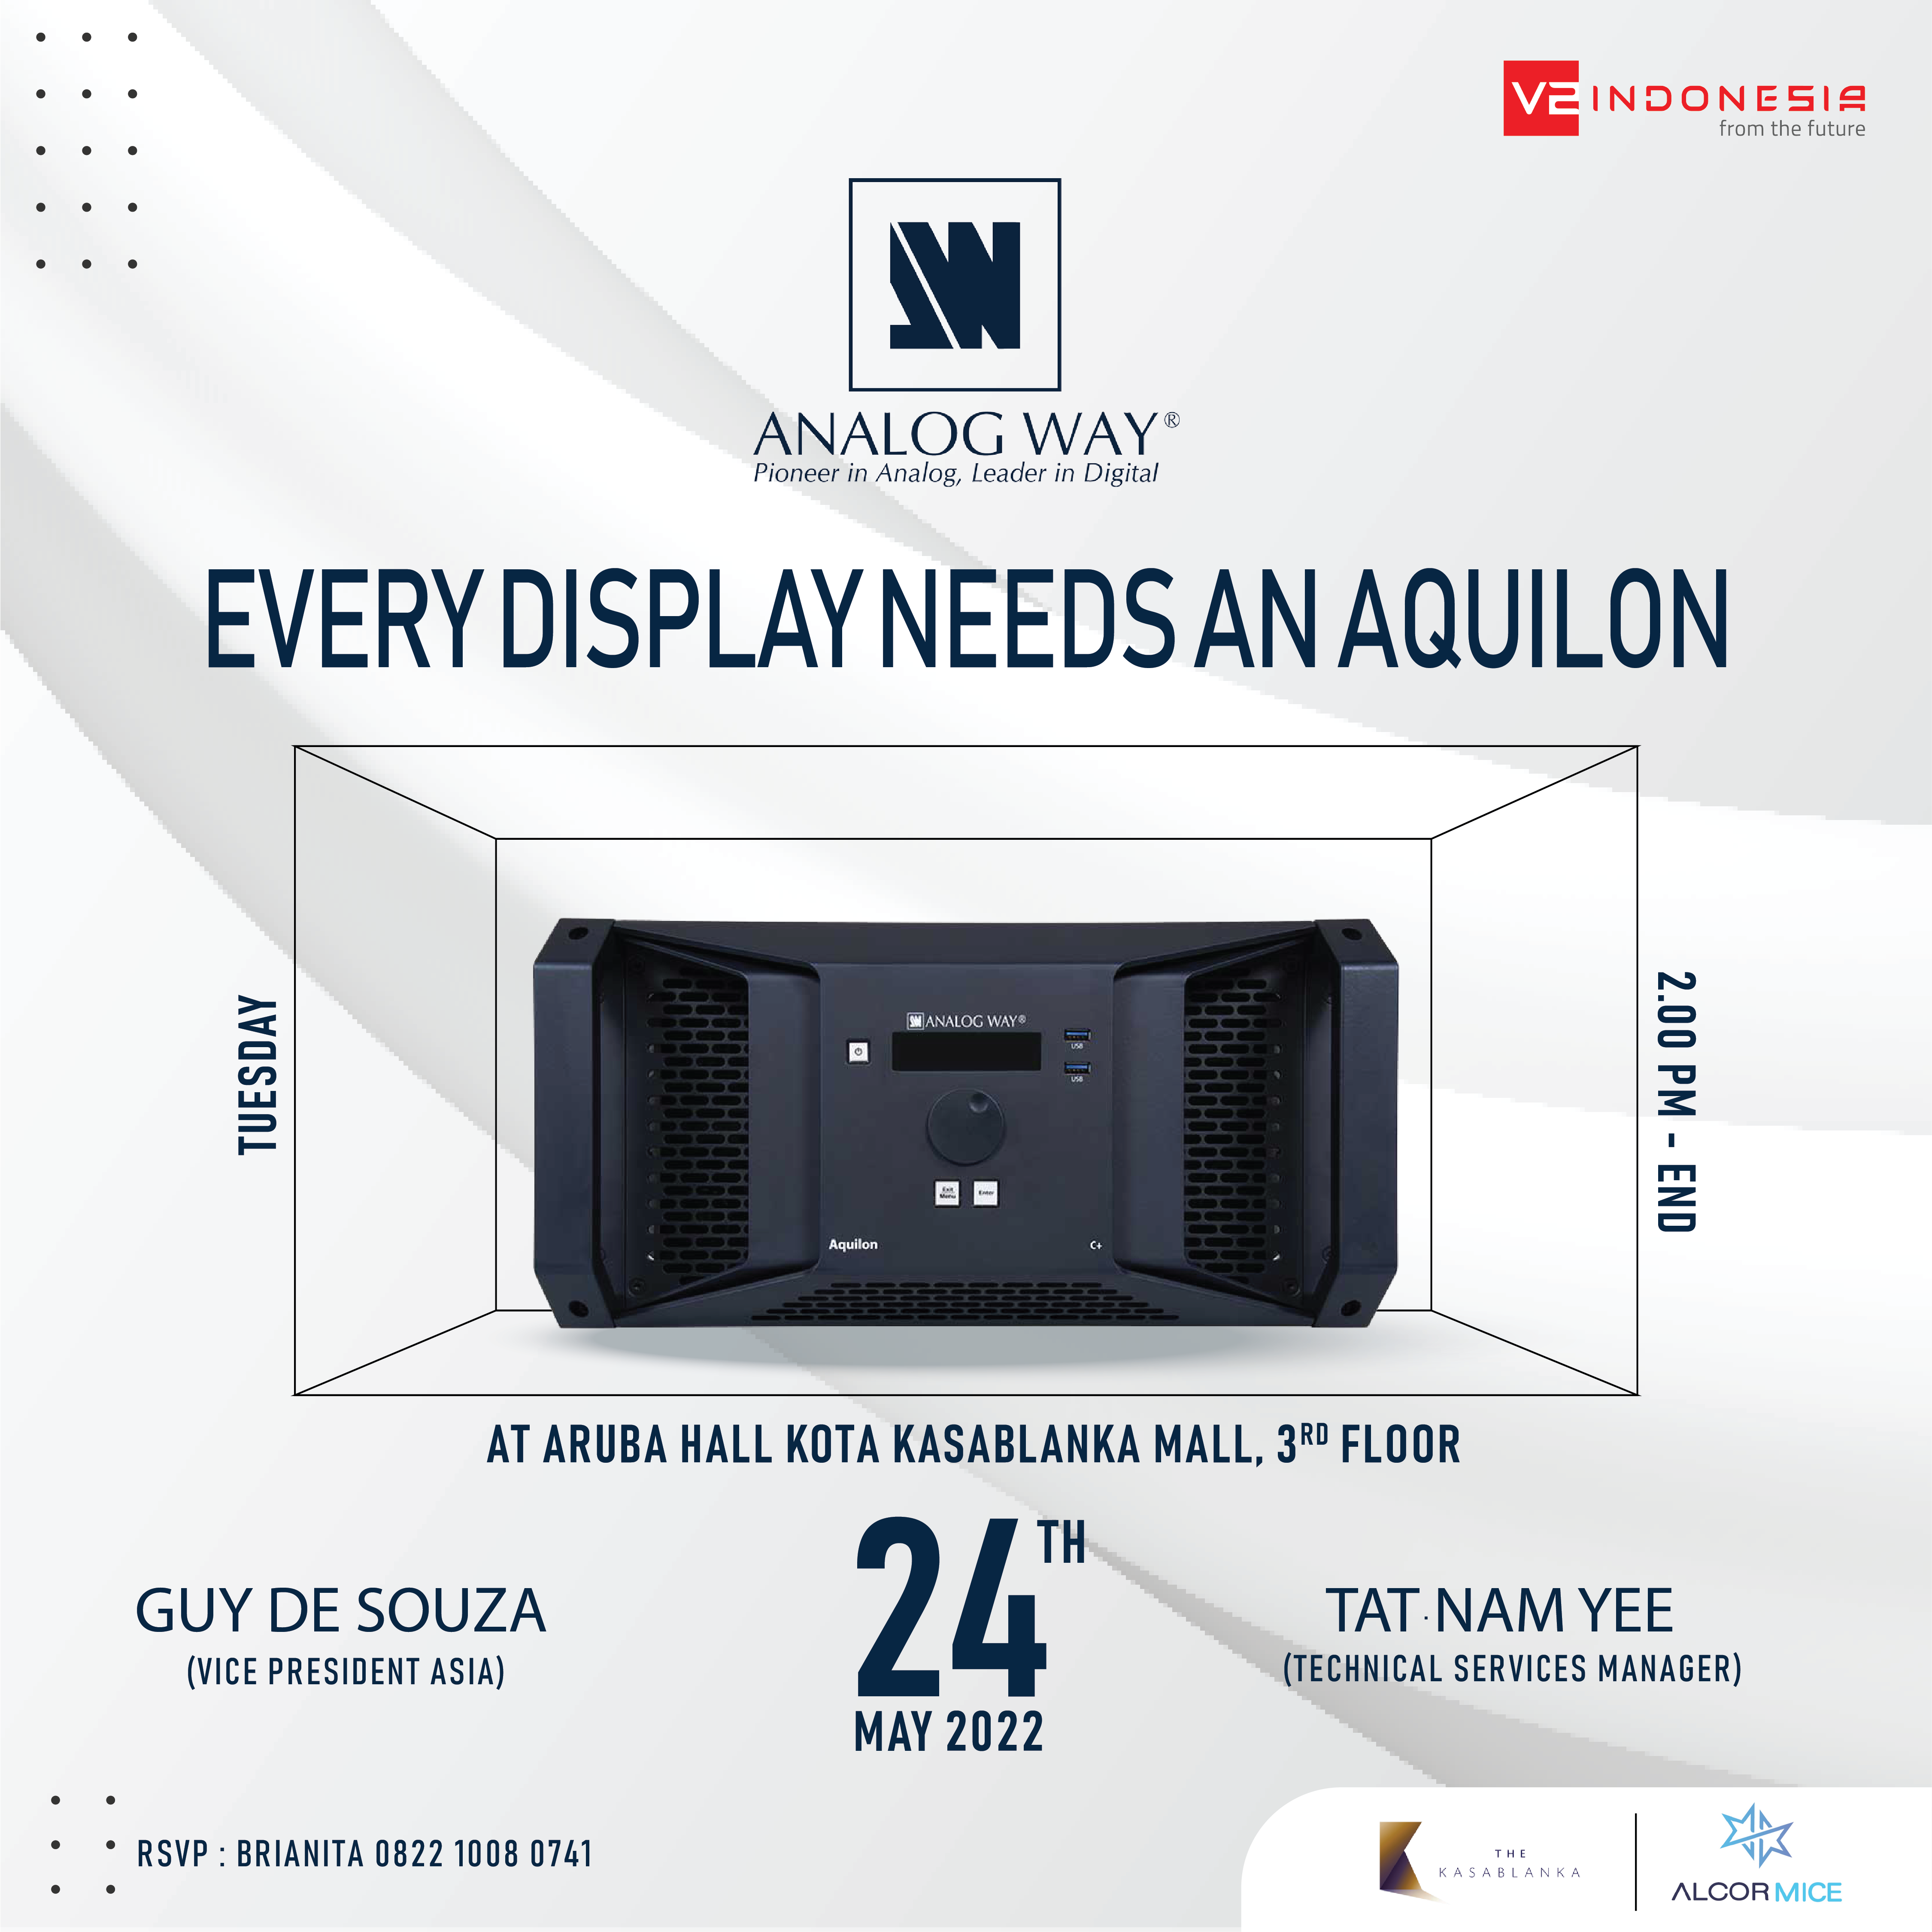 Every Display Needs an Aquilon by Analog Way